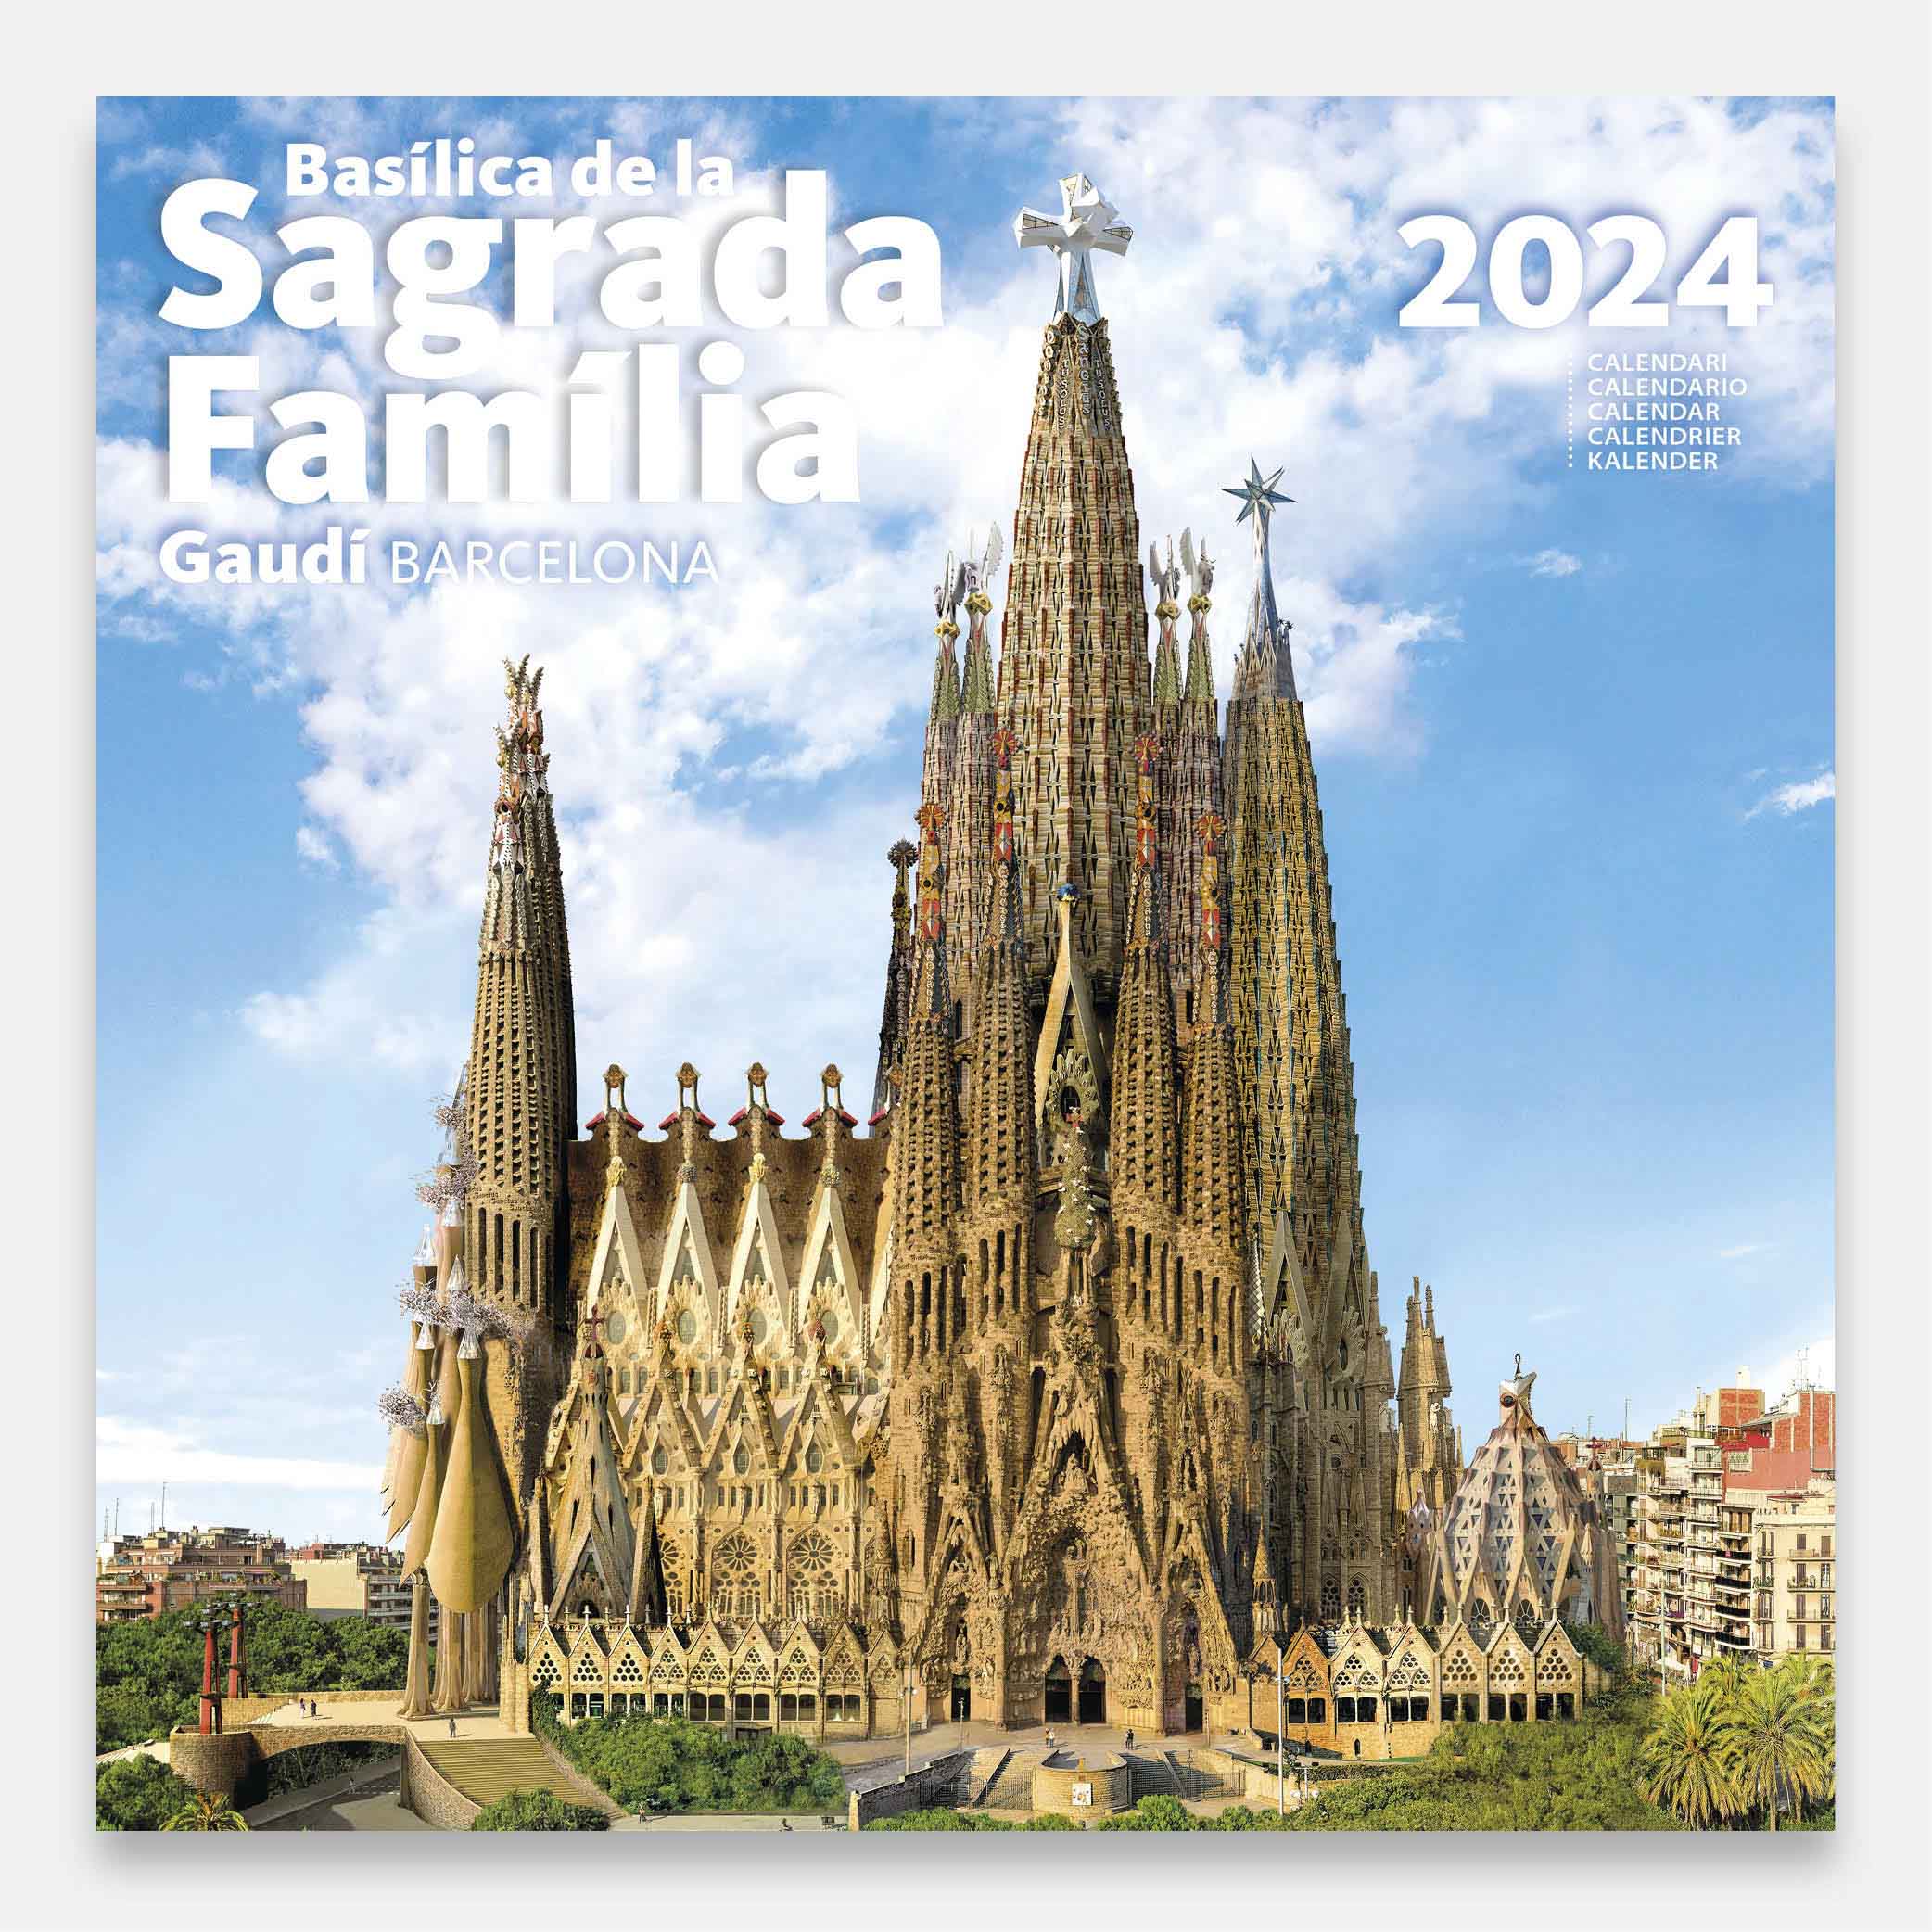 Basílica de la Sagrada Família 24sfg1 calendario pared 2024 gaudi sagrada familia